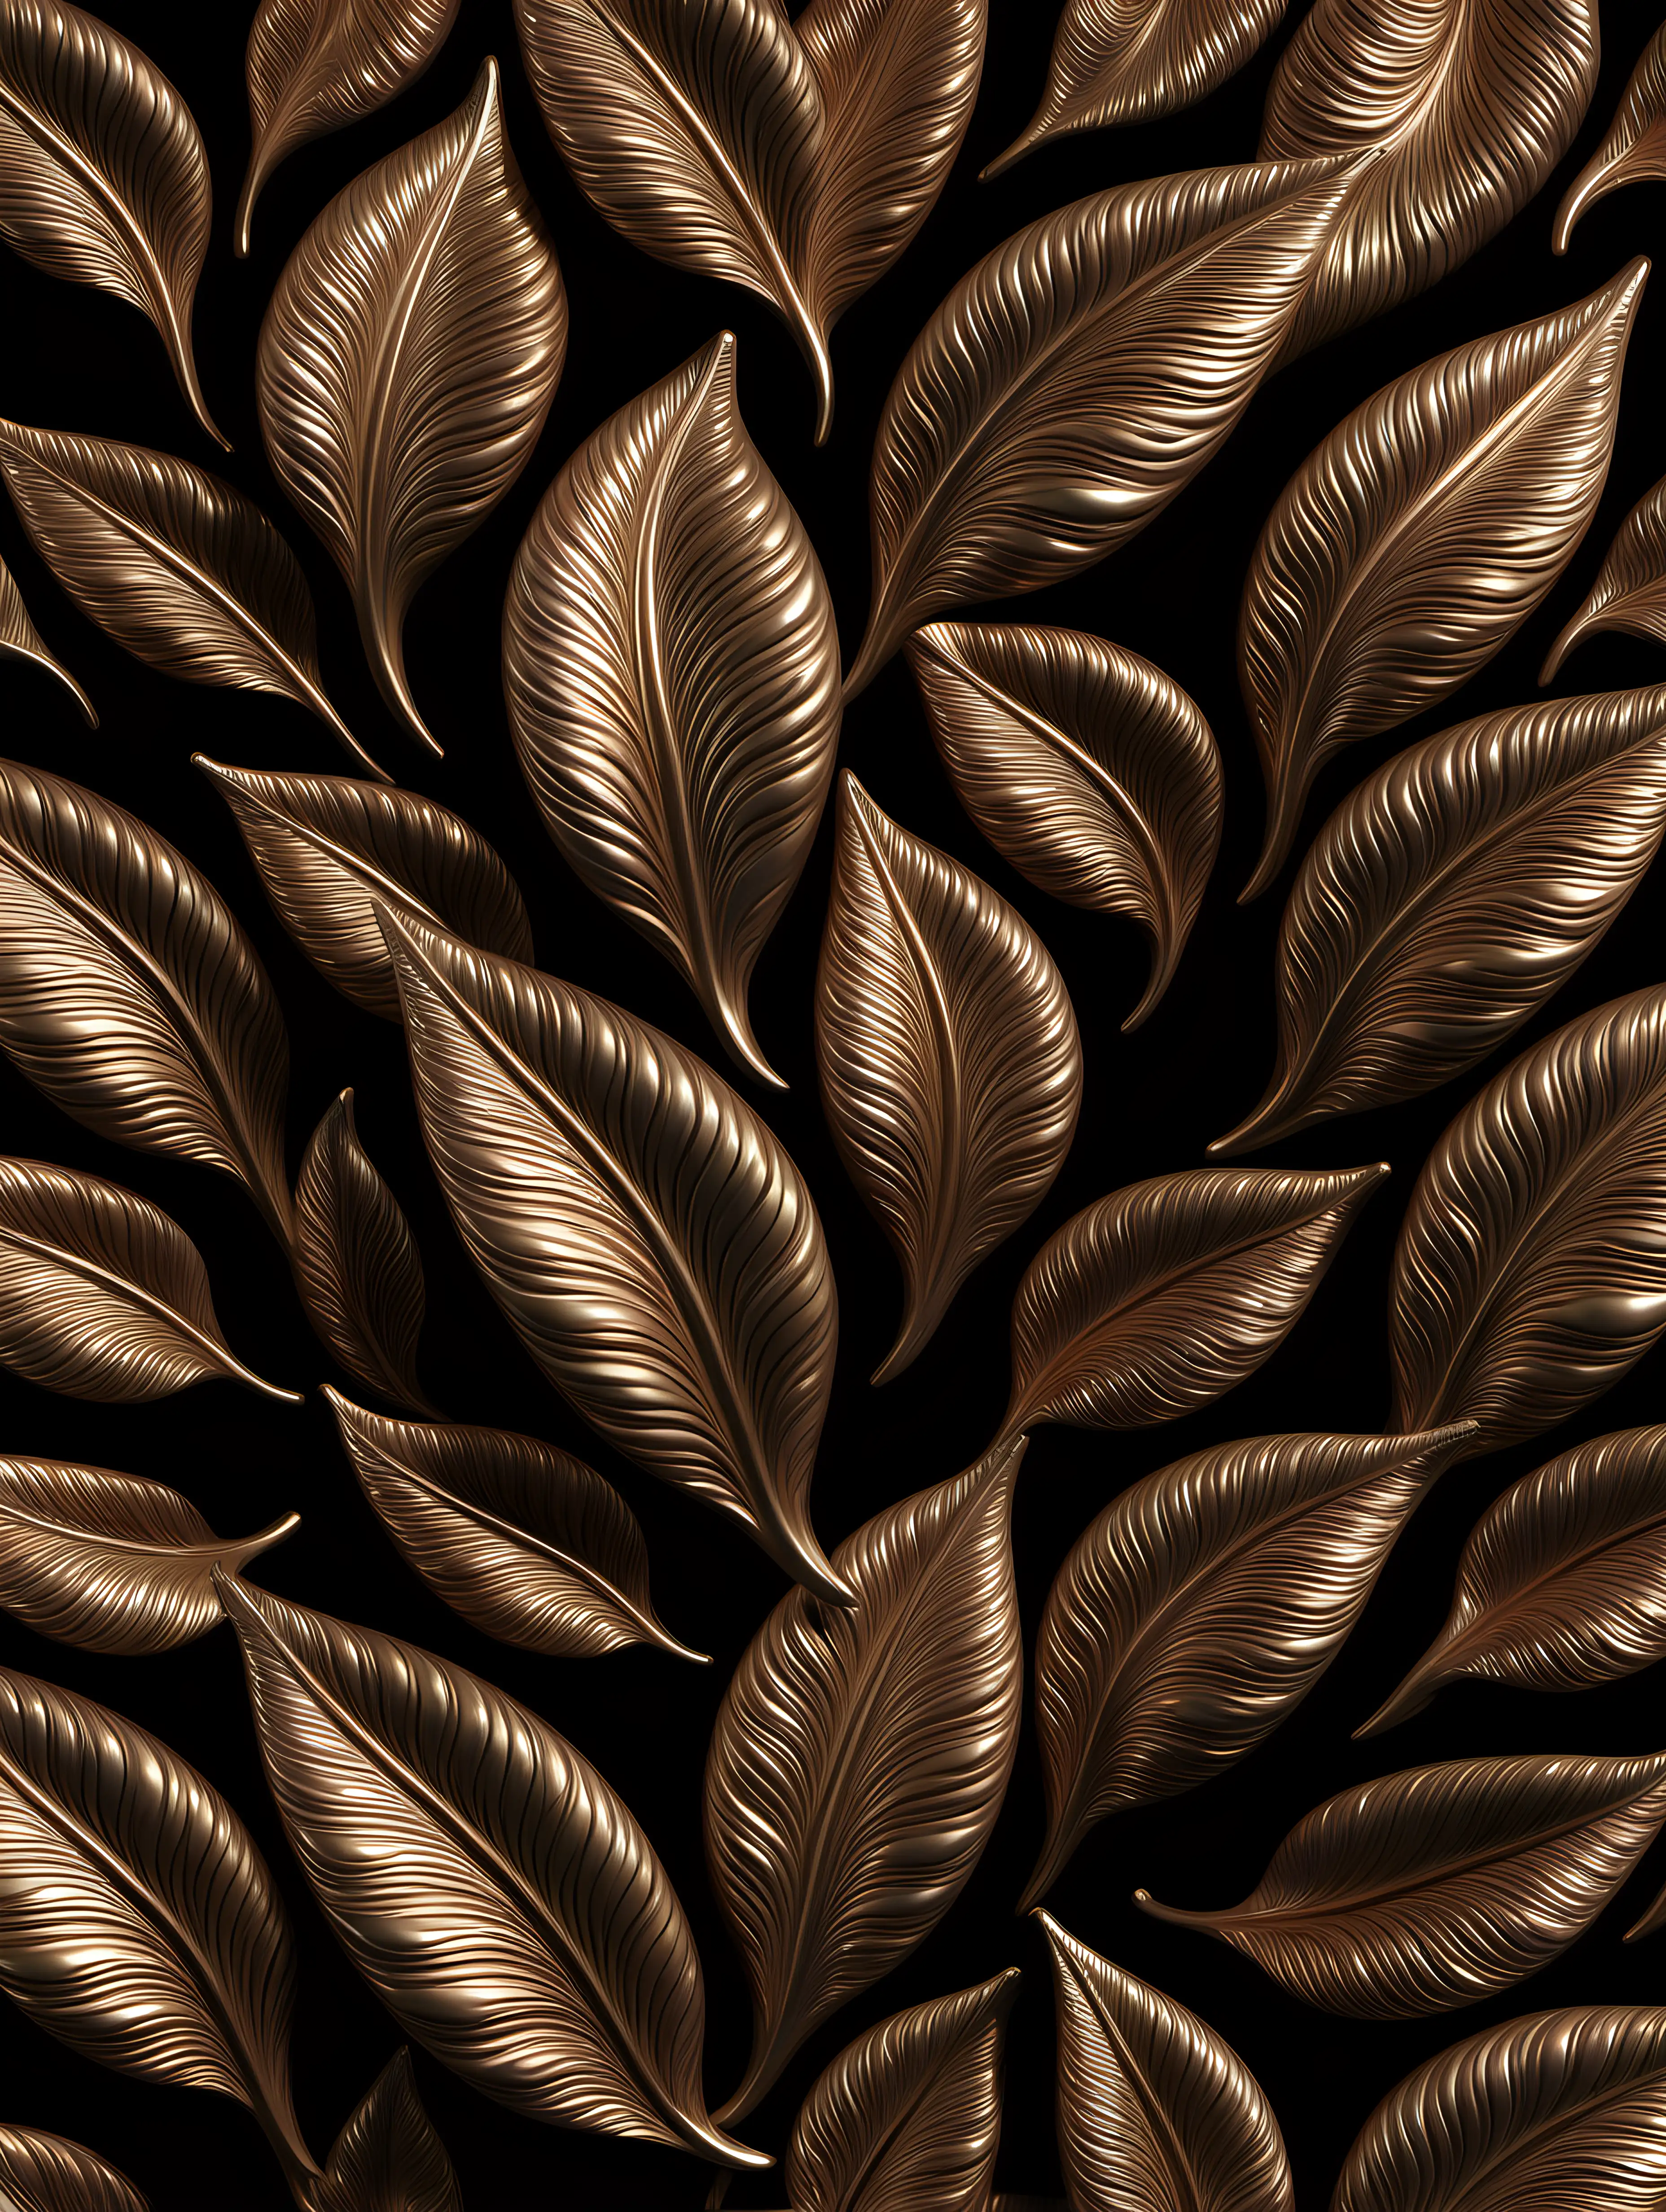 3D bronze leave pattern, vintage style, black background